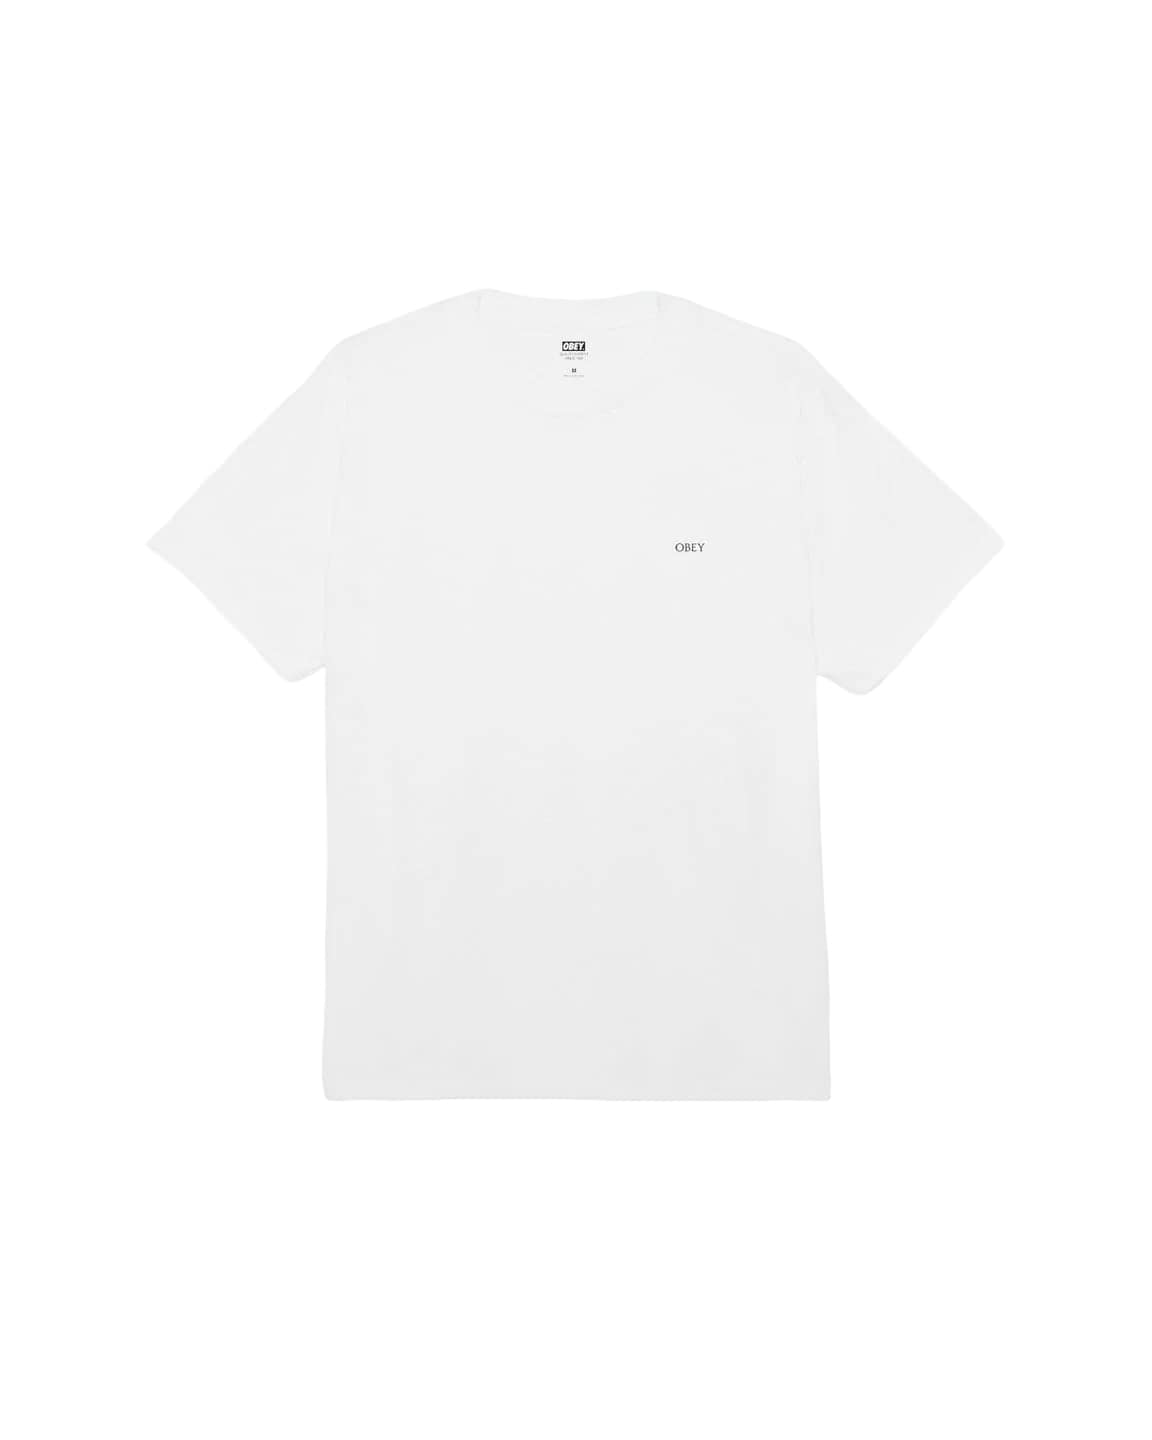 Obey Men's Ripped Icon White T-Shirt